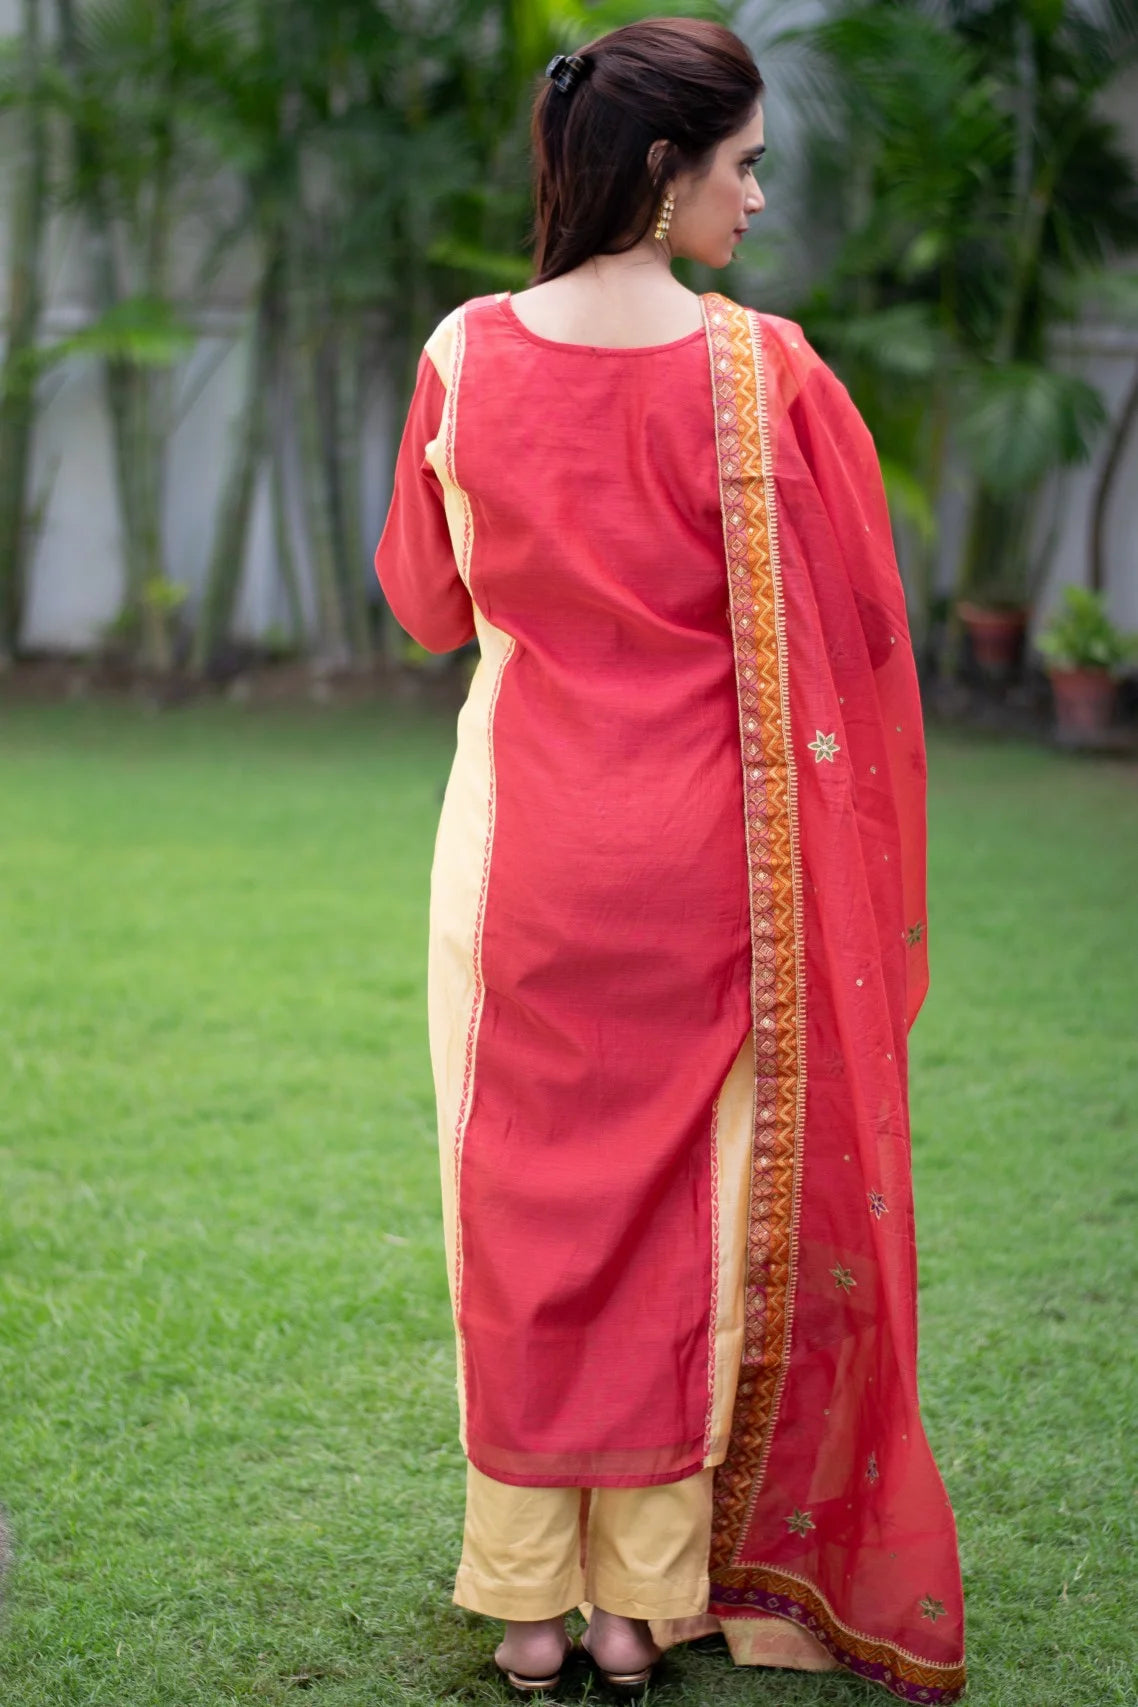 Indian women wearing zardosi work dress